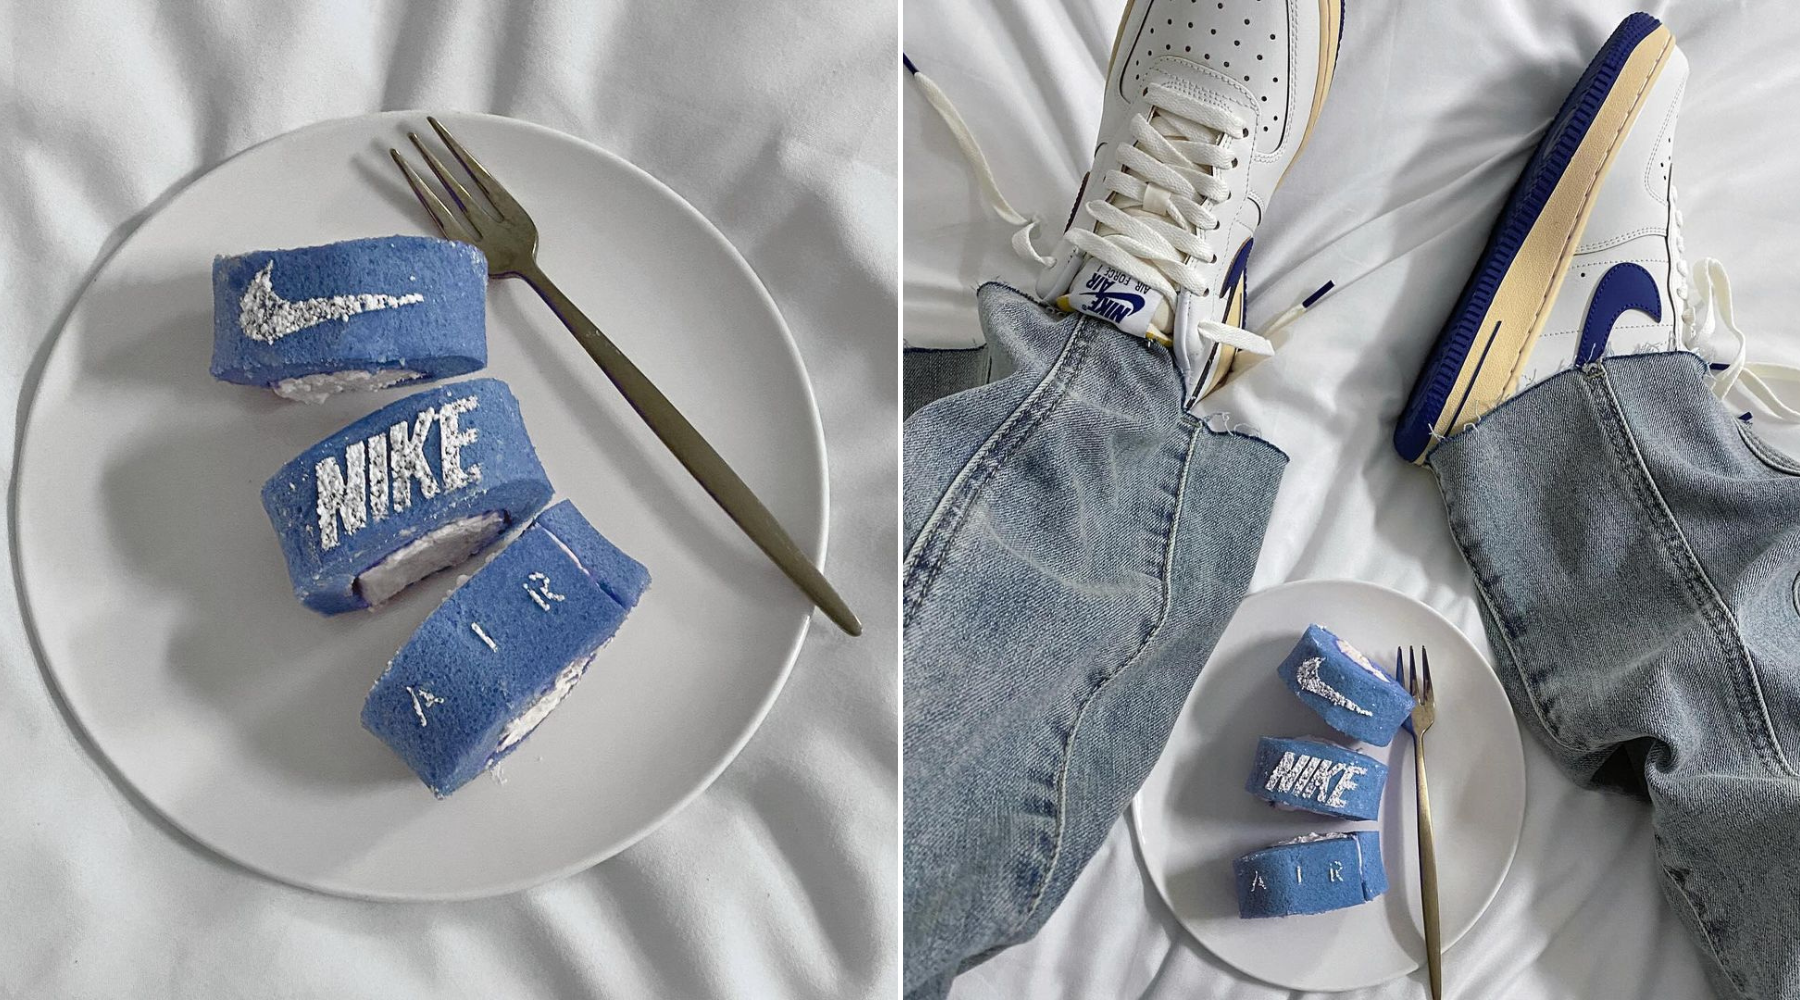 Vreme je za ultimativni sneakerhead zimski rolat – a mi imamo recept